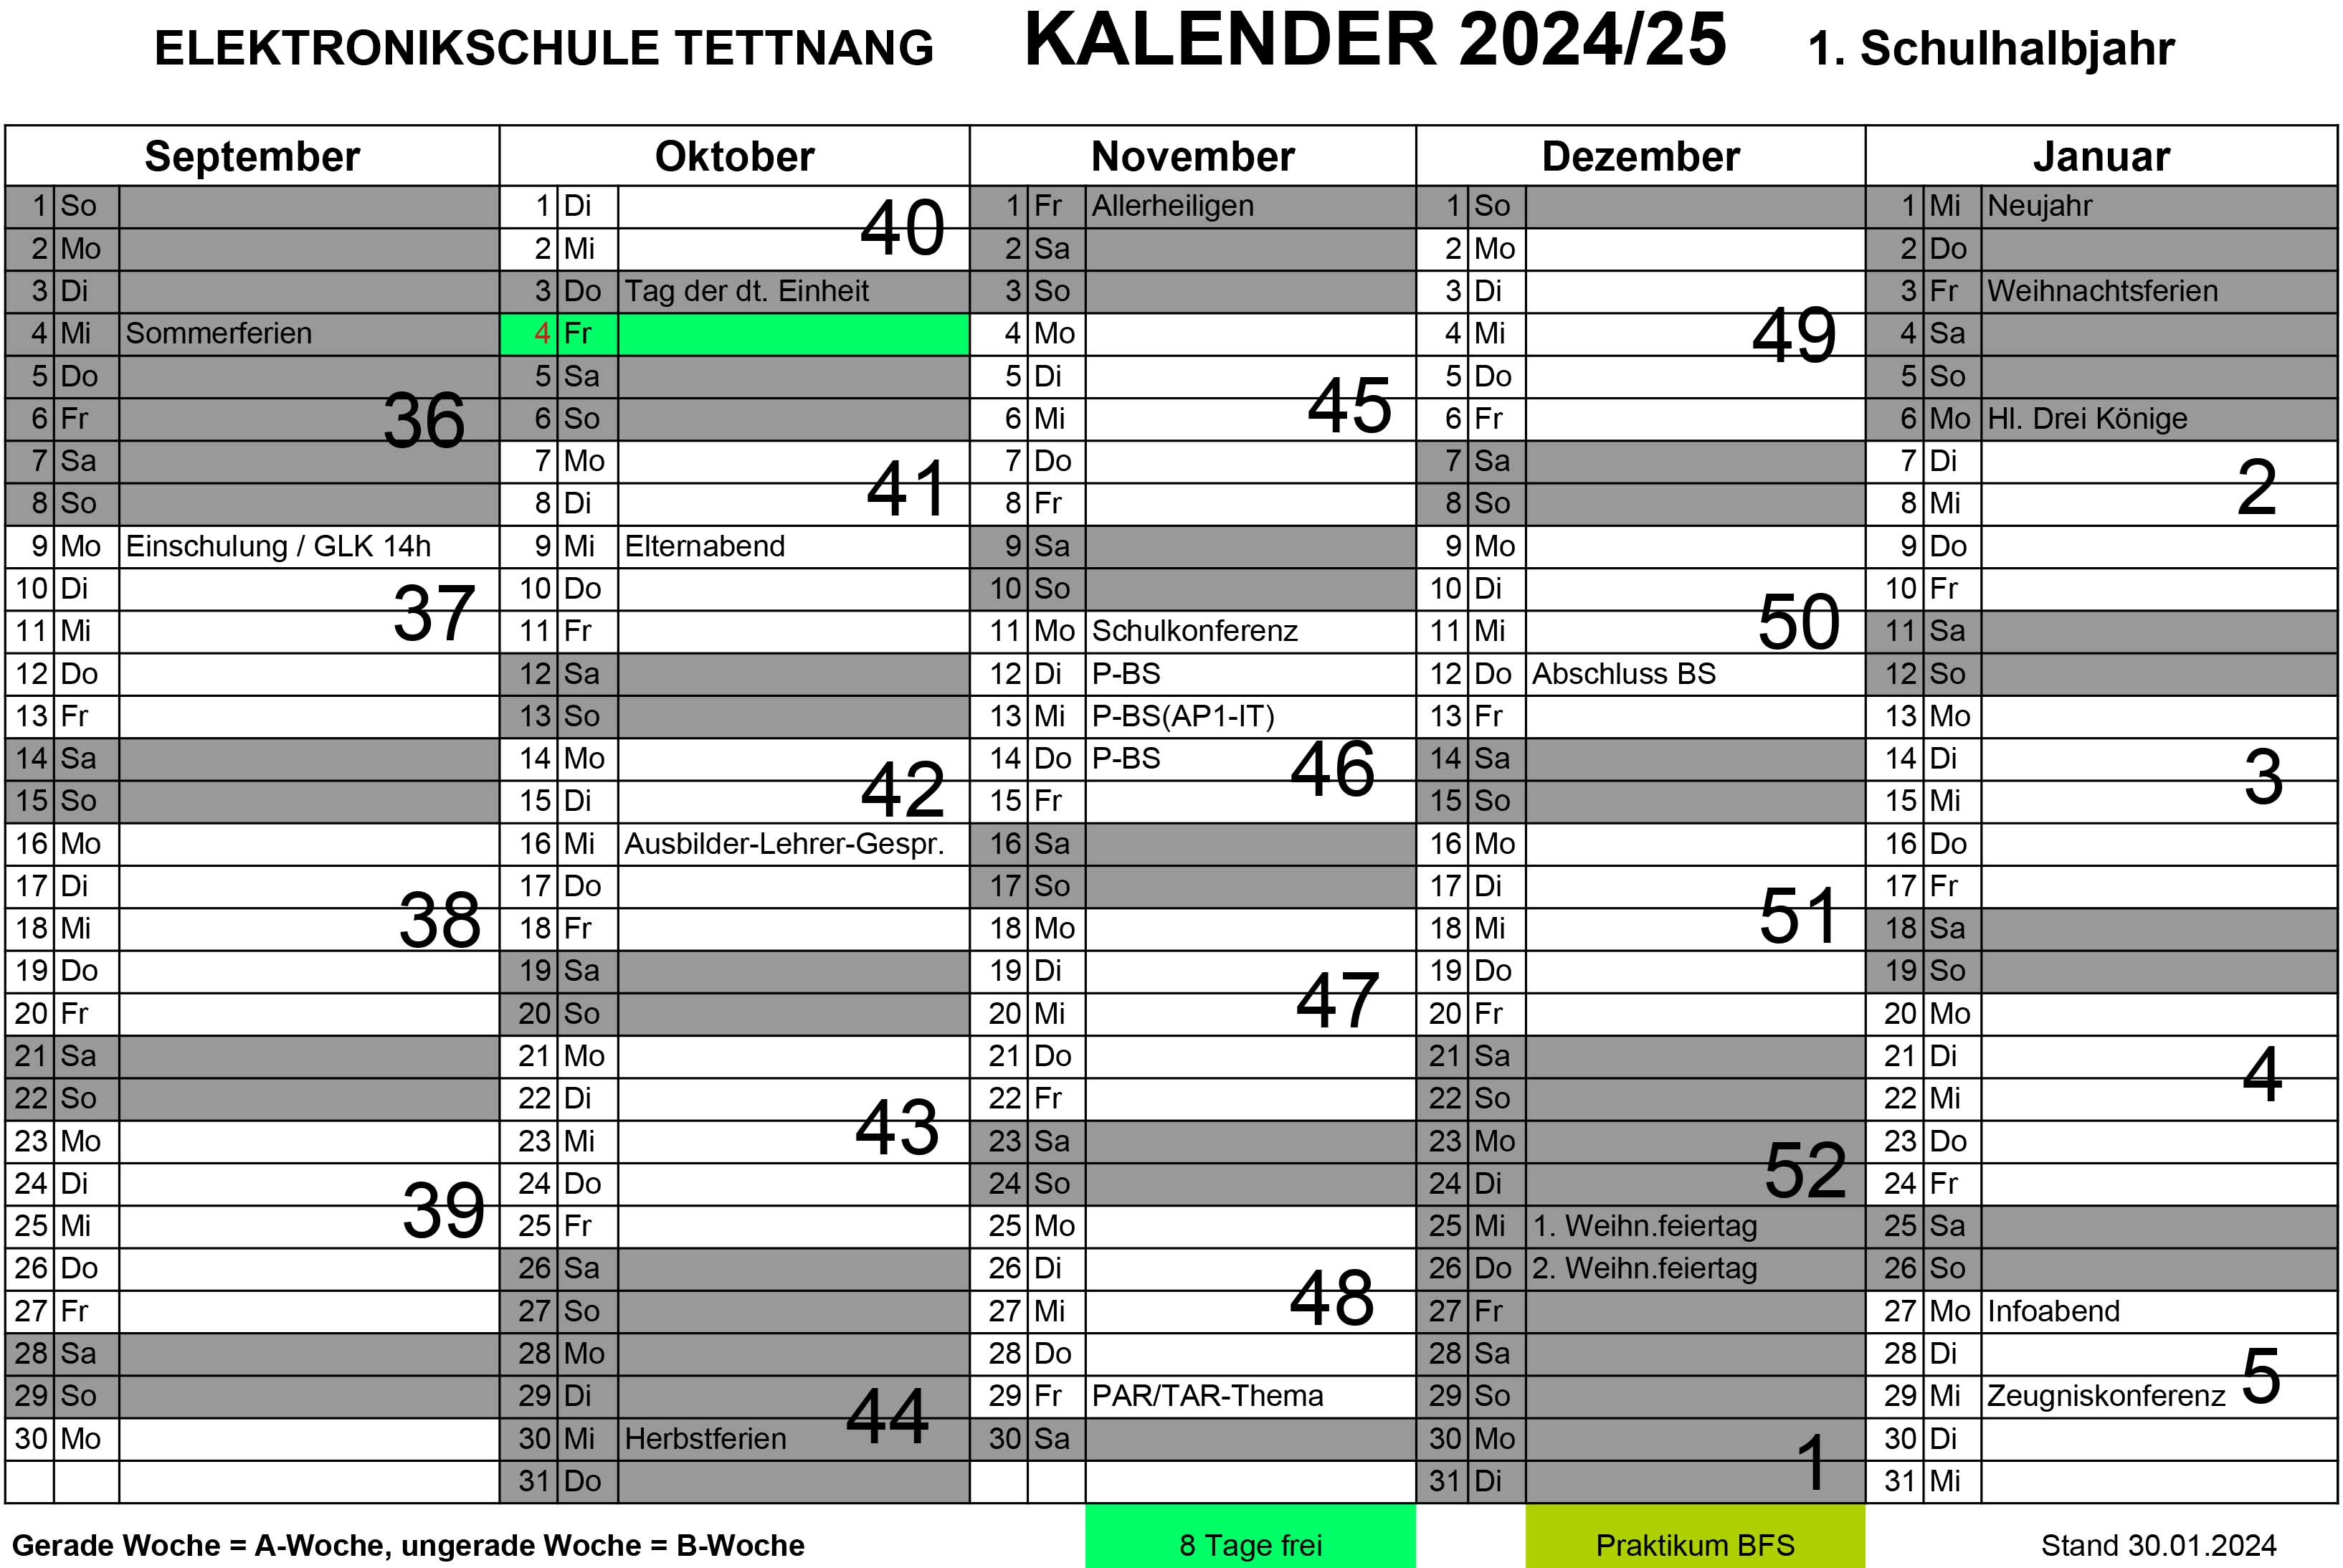 EST KALENDER 2024 25 240130